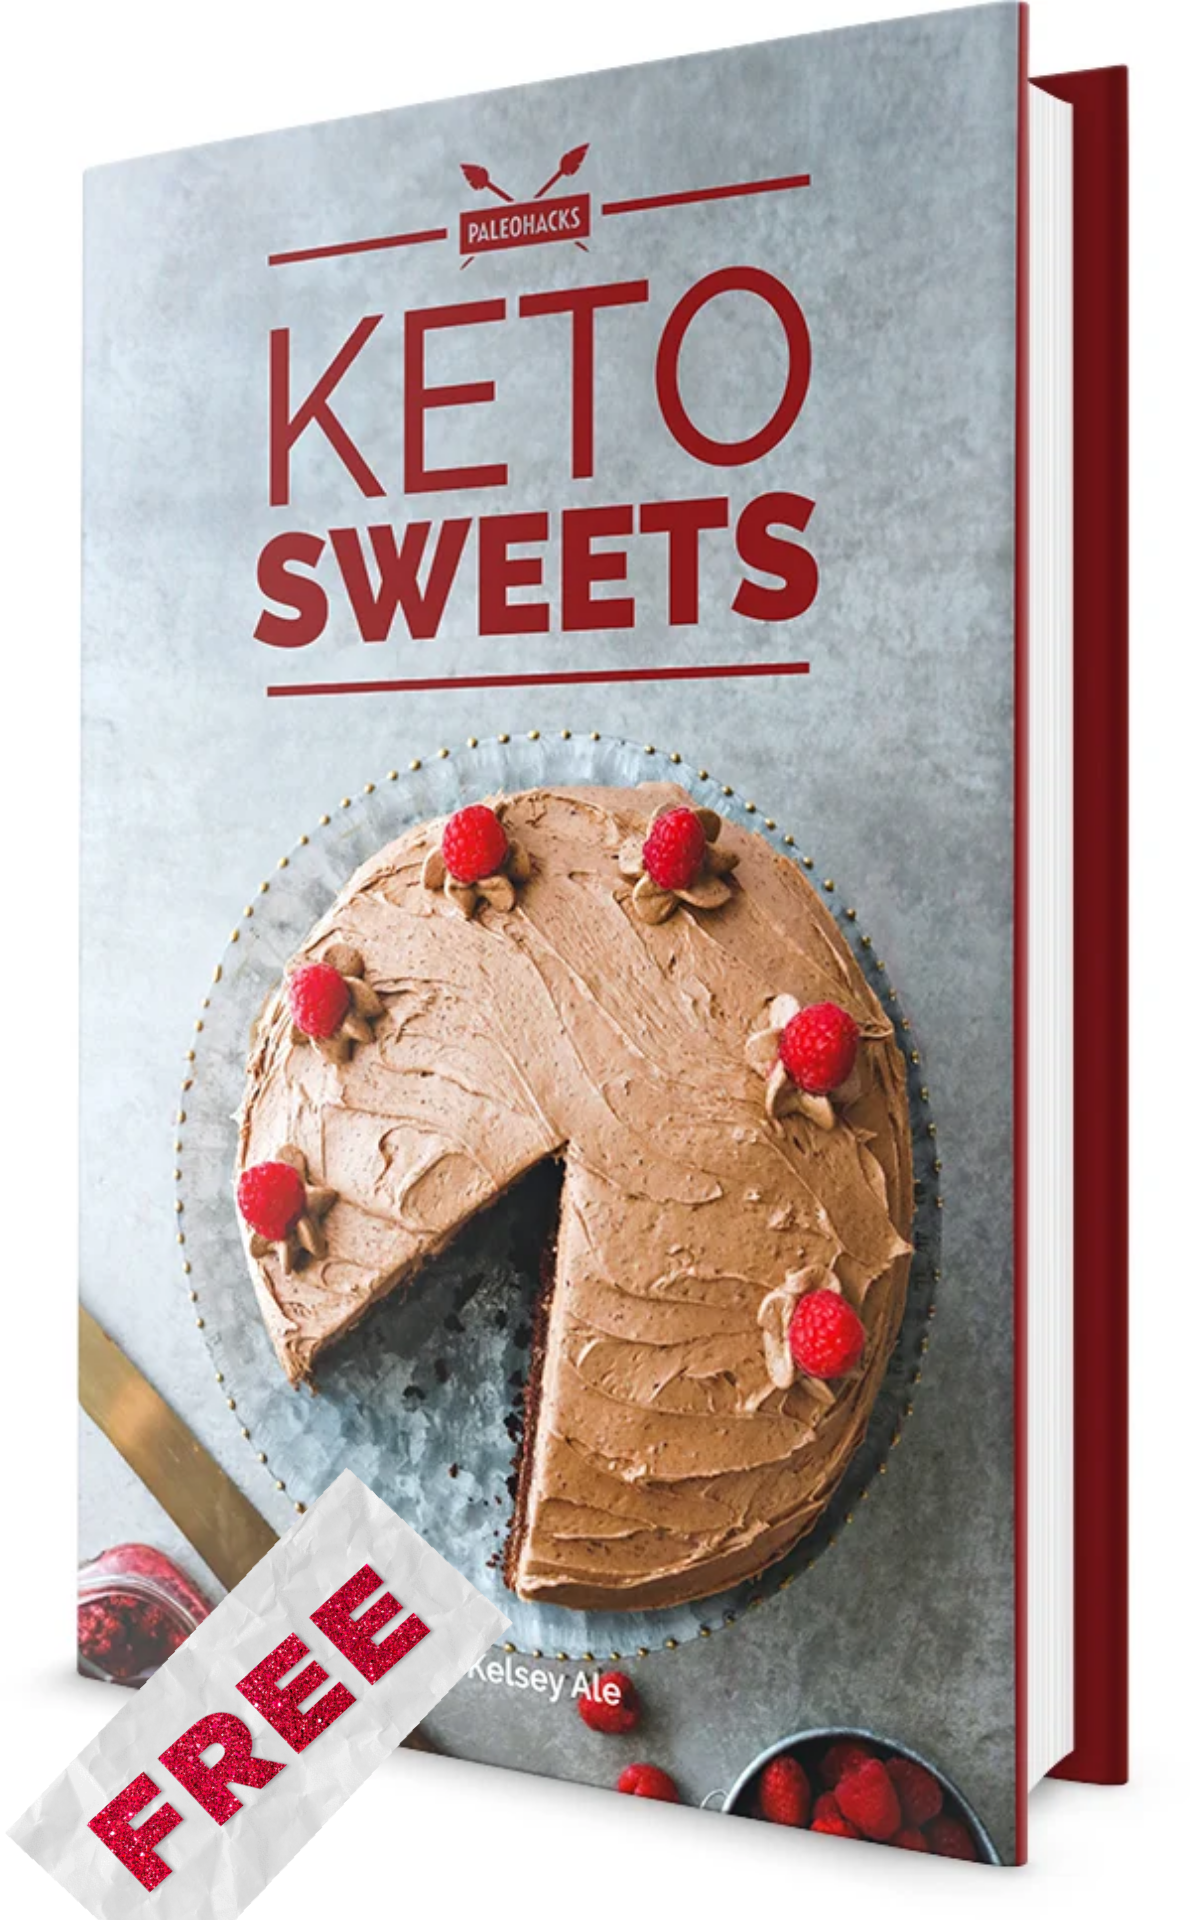 Keto Sweets Cookbook